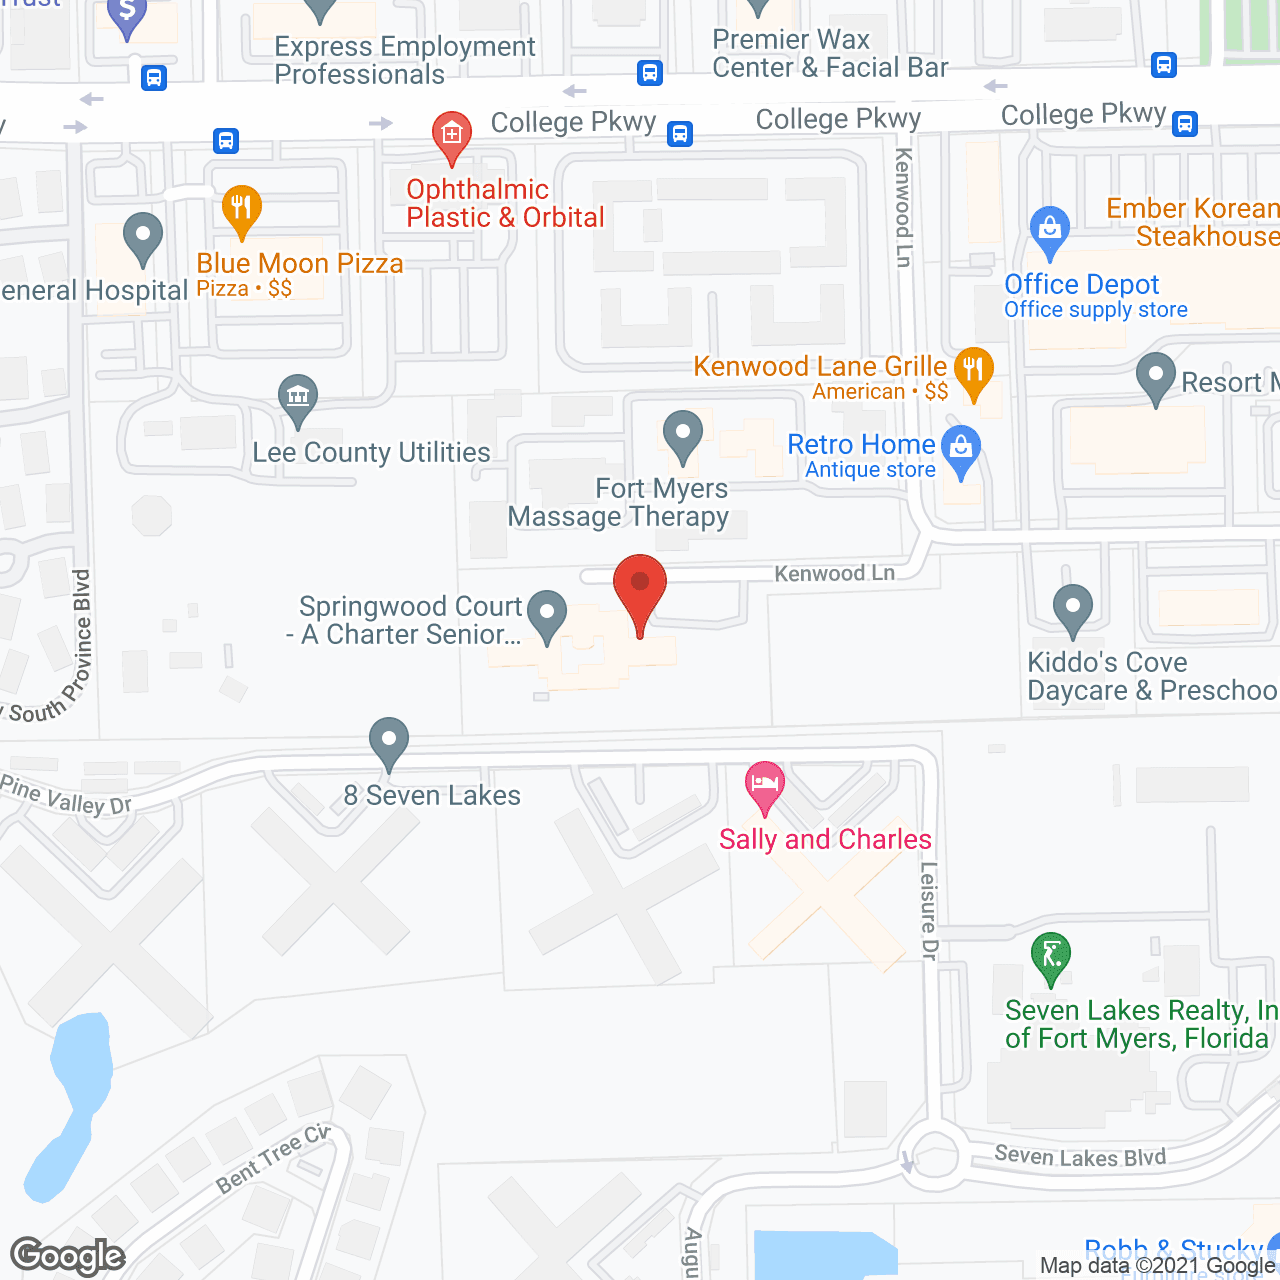 Springwood Court in google map